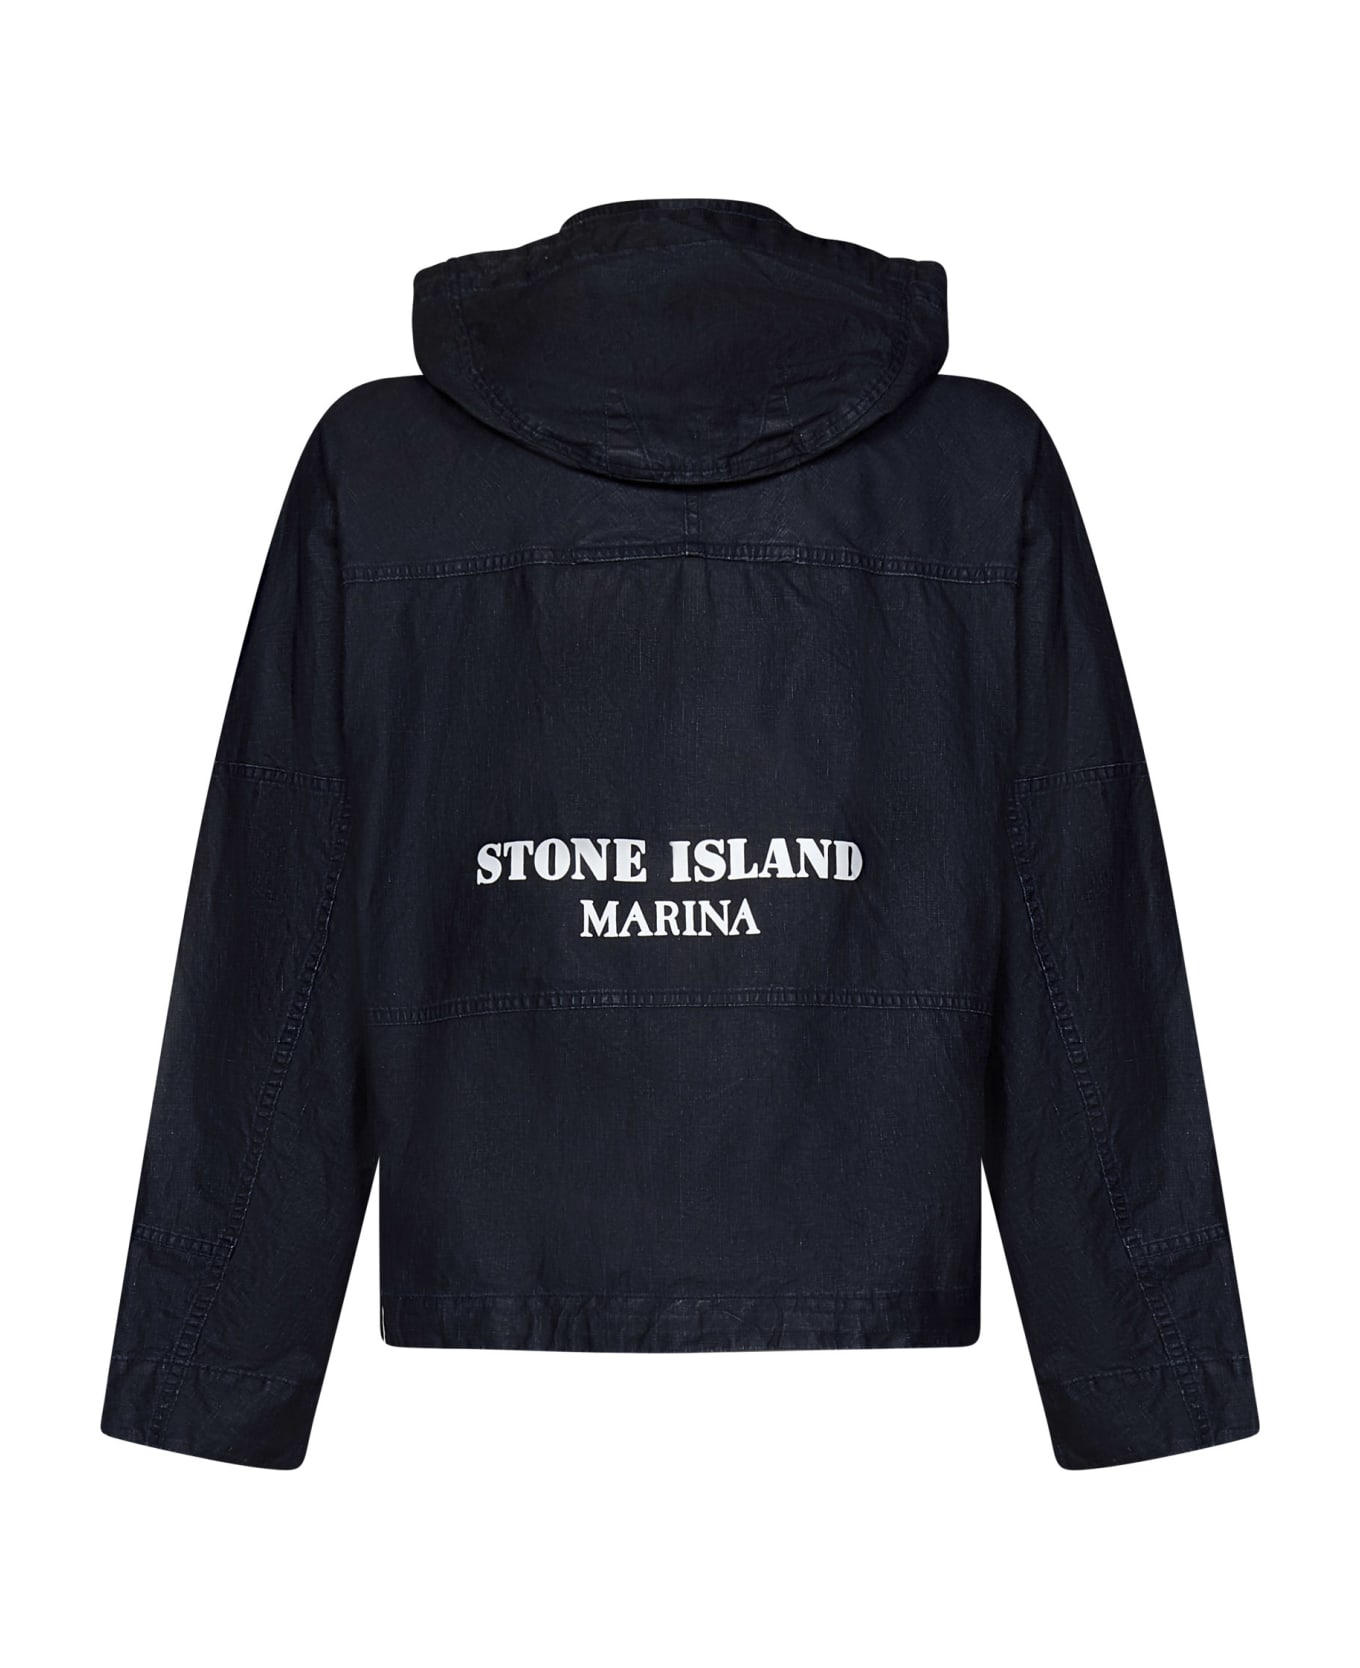 Stone Island Marina_raw Jacket - DENIM SCURO